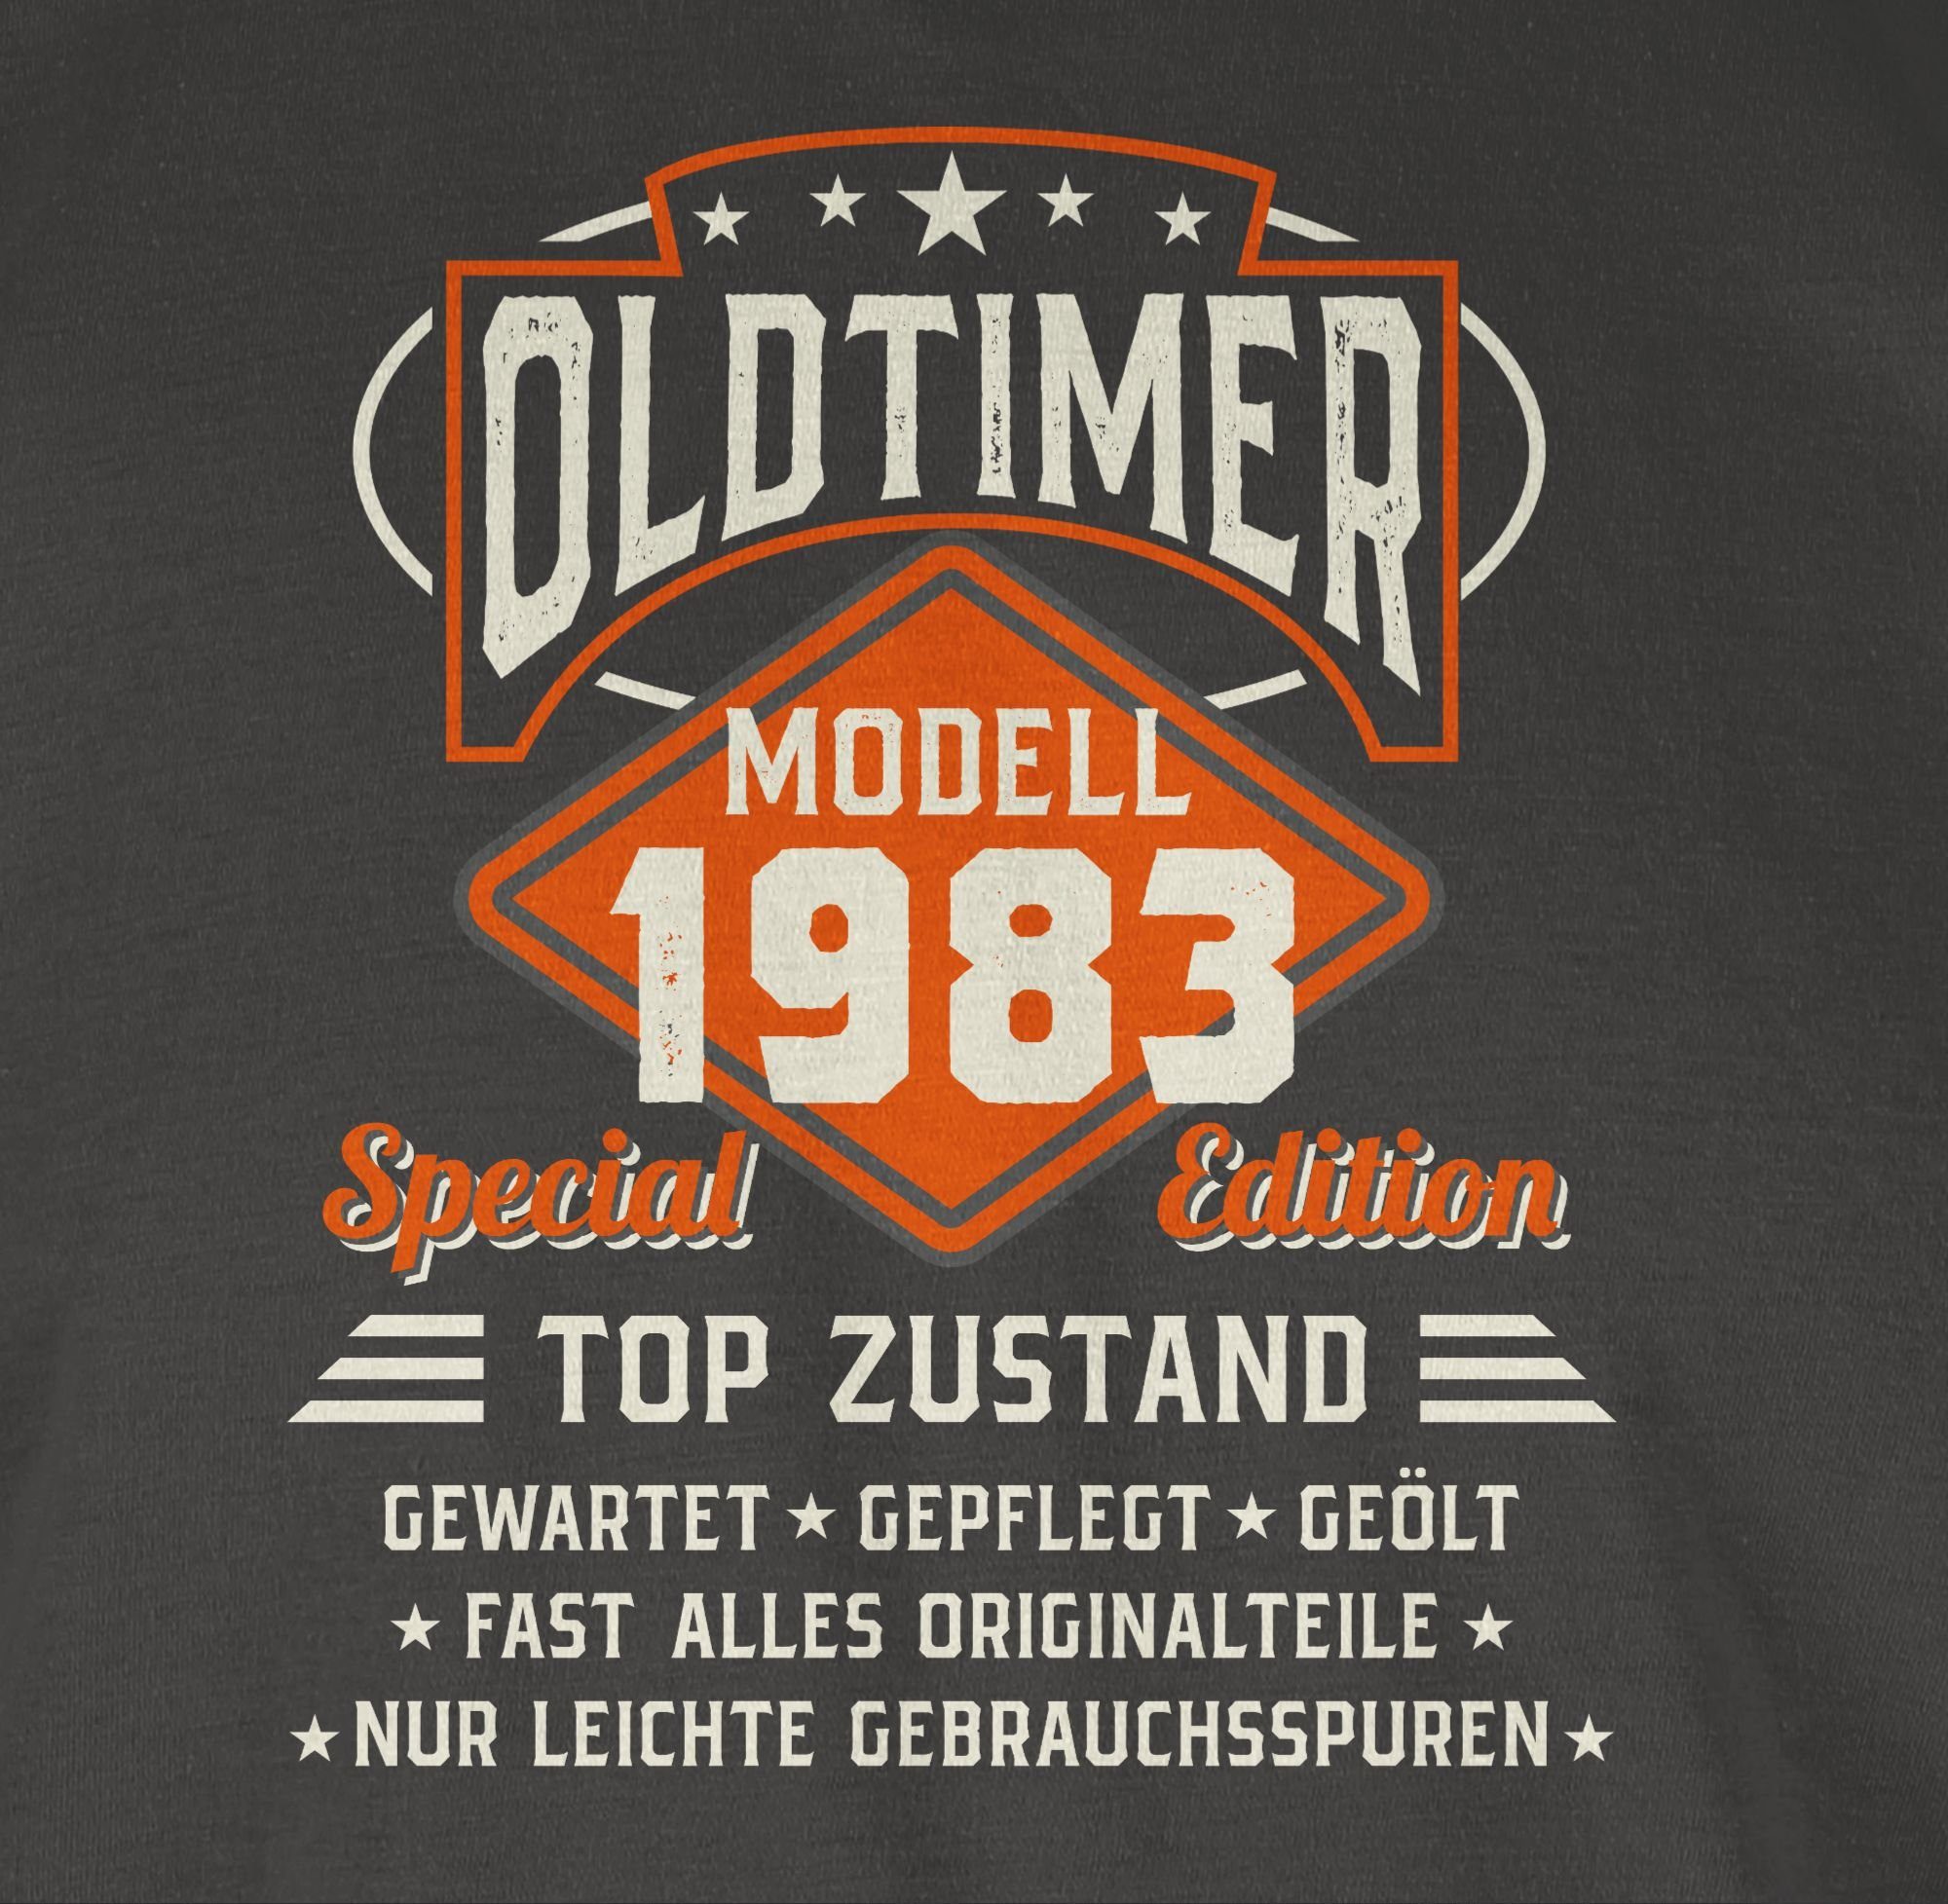 T-Shirt Shirtracer 40. Oldtimer Modell Dunkelgrau 02 Geburtstag 1983